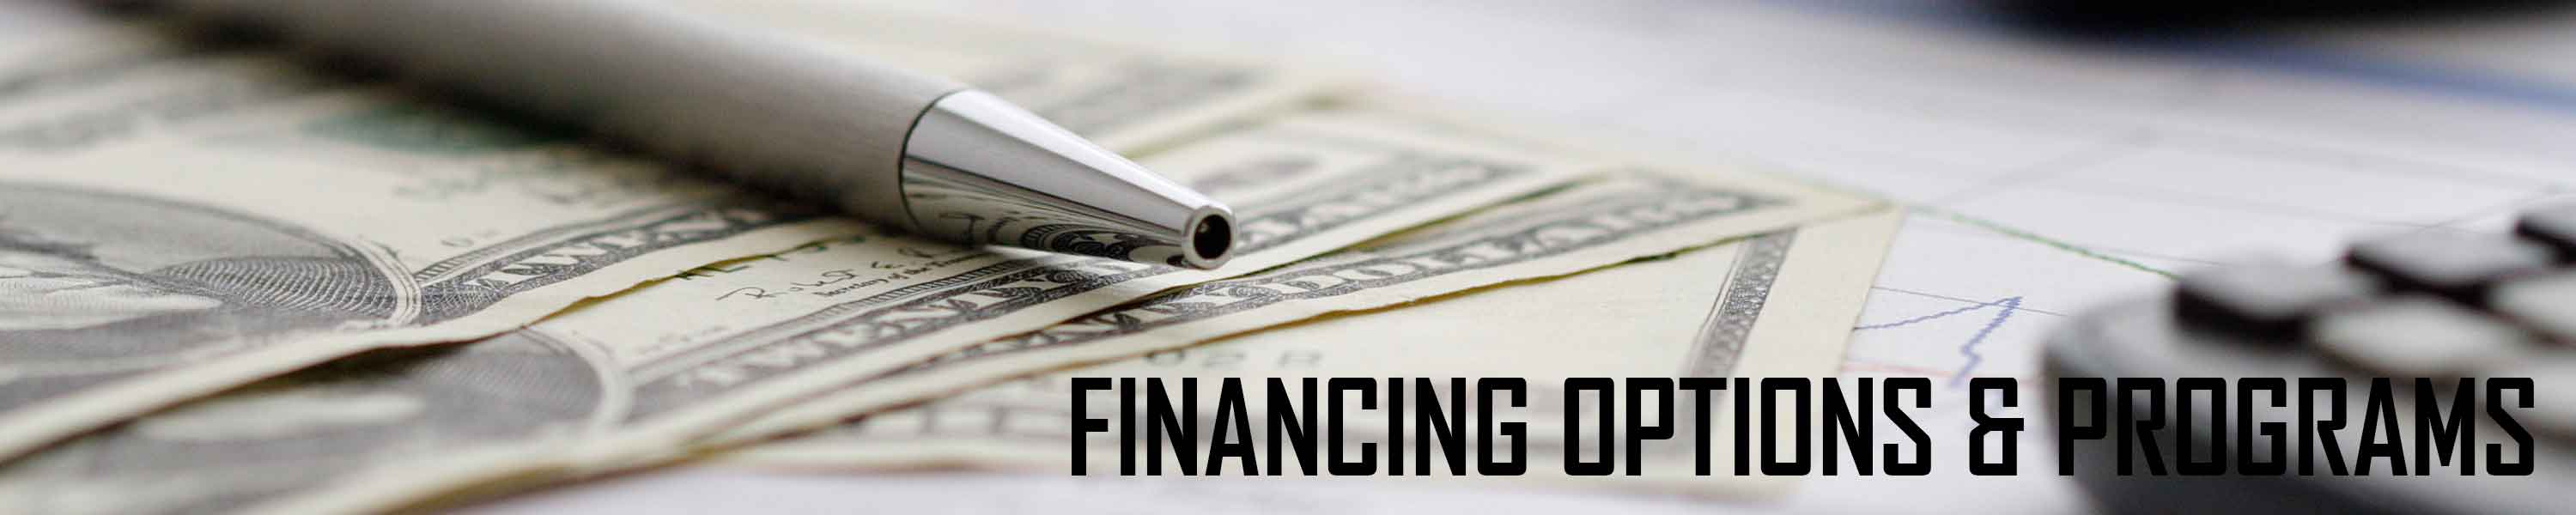 Financing-options-&-programs